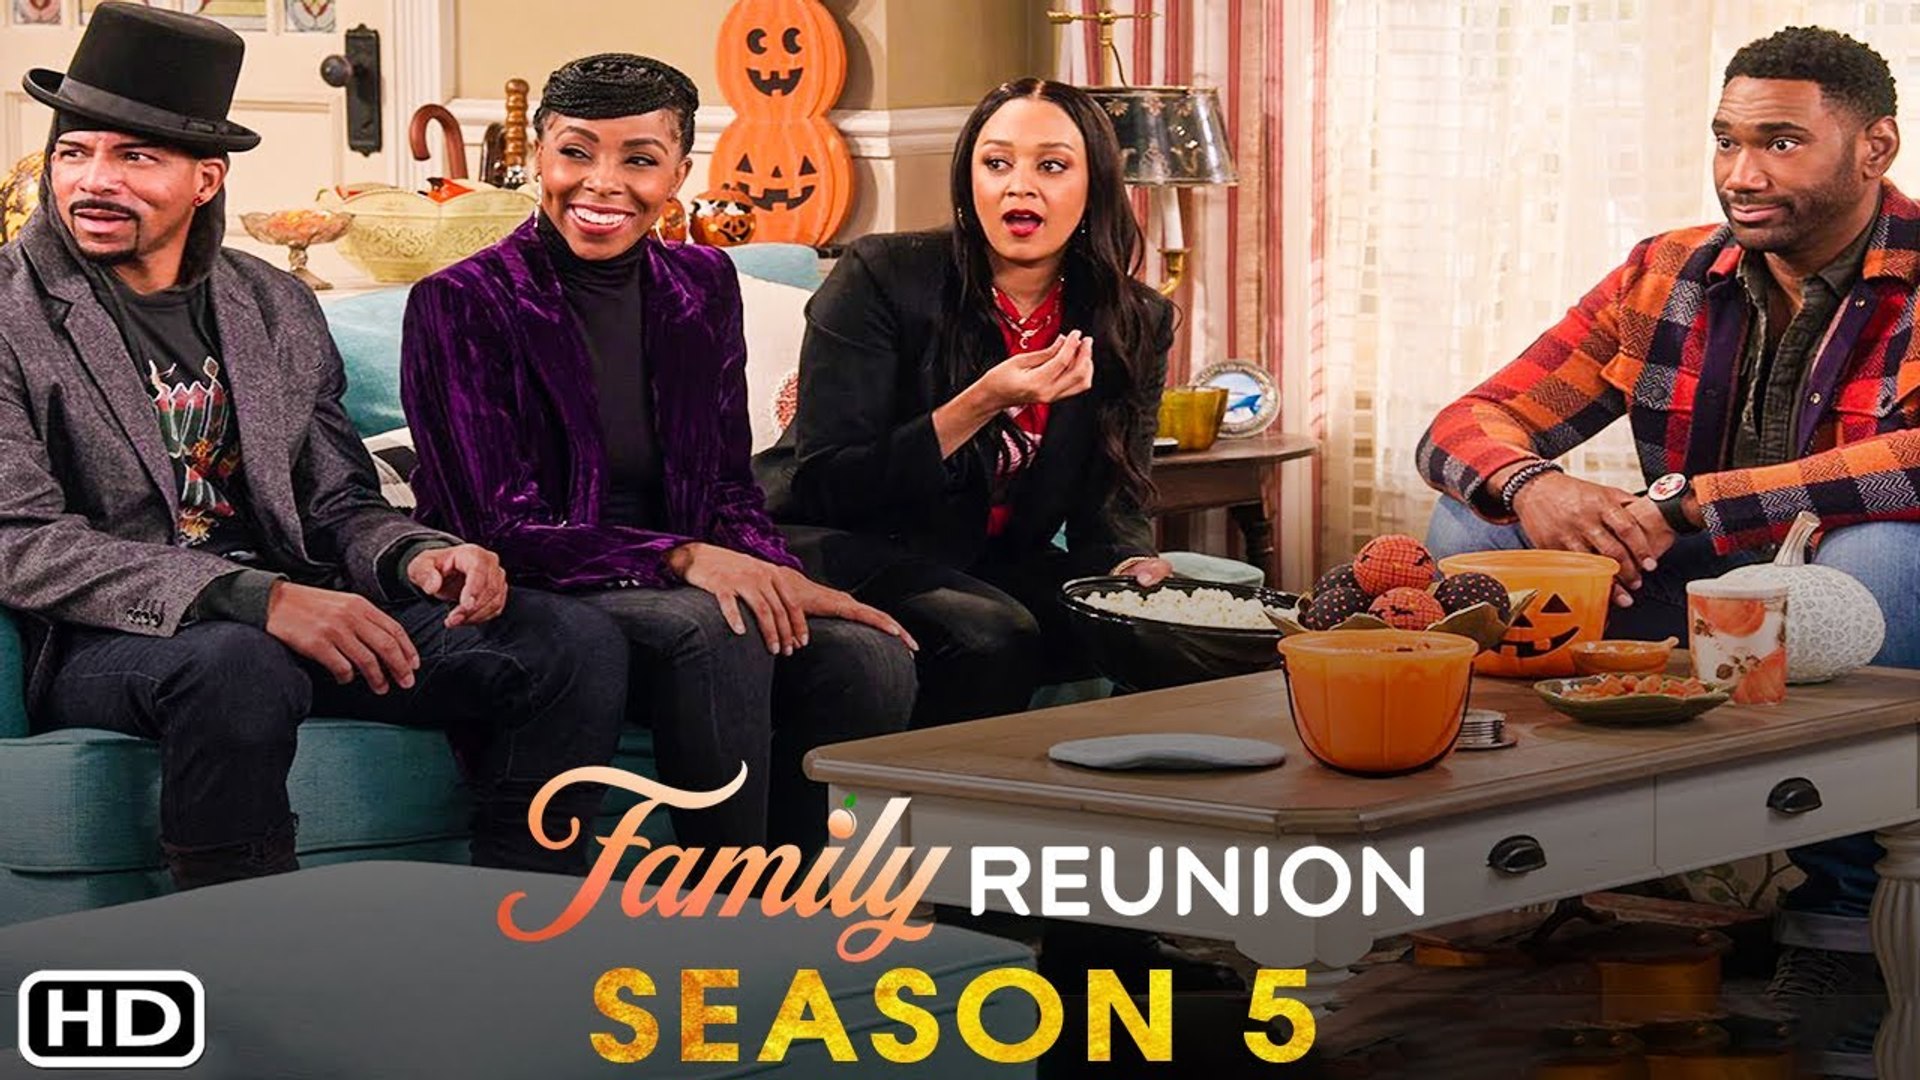 Family Reunion Season 5 Trailer (2021) - Netflix, Release Date, Family  Reunion Part 5 Teaser, Promo - video Dailymotion